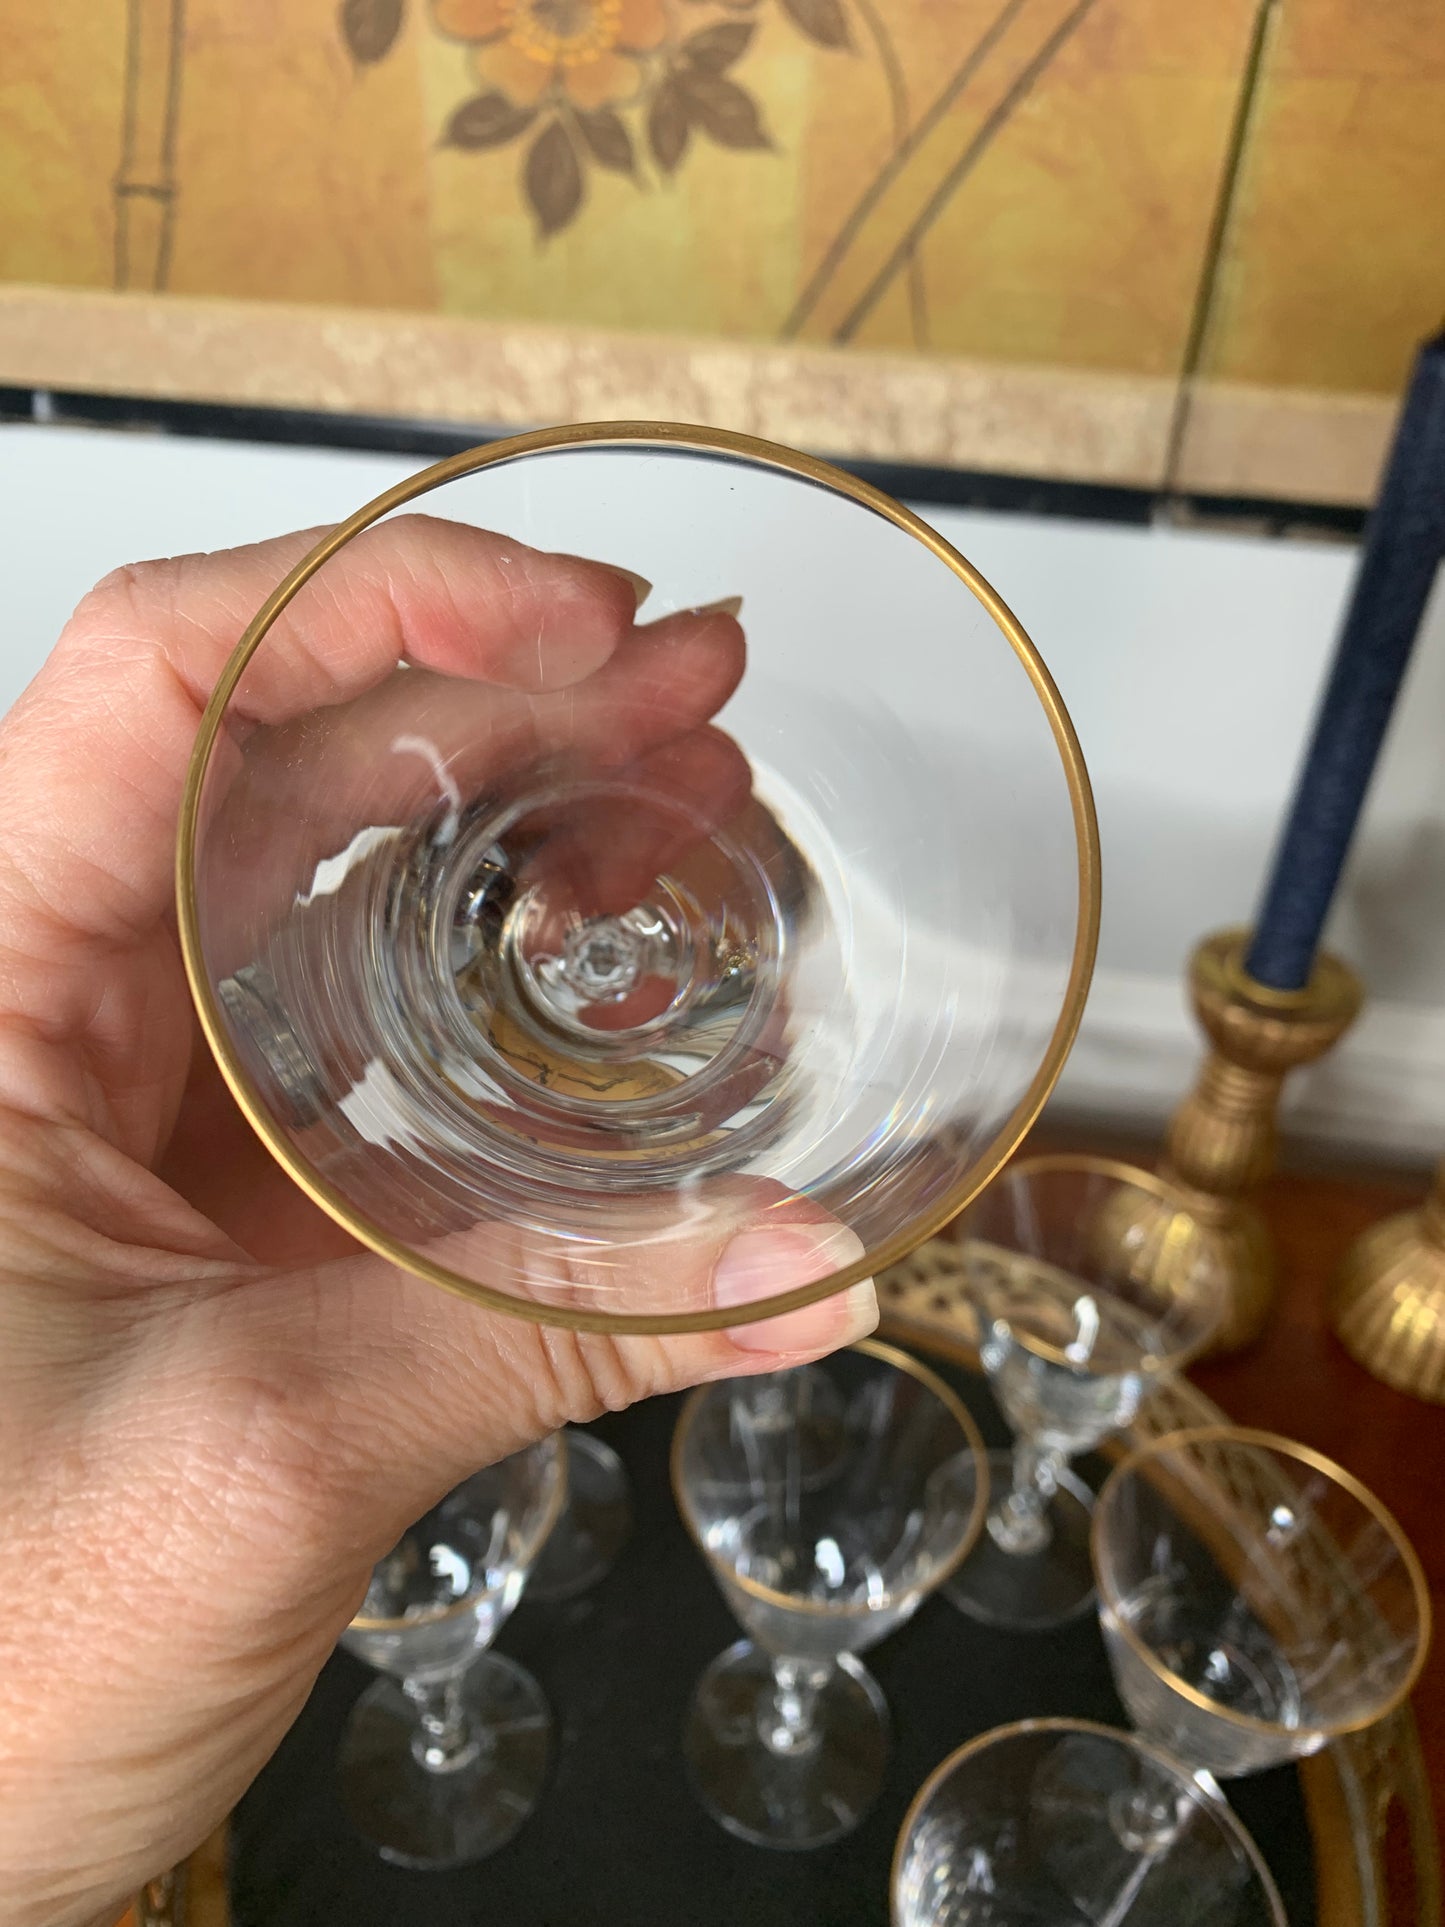 Set (10) Vintage Fostoria Aurora Gold Wine Glasses